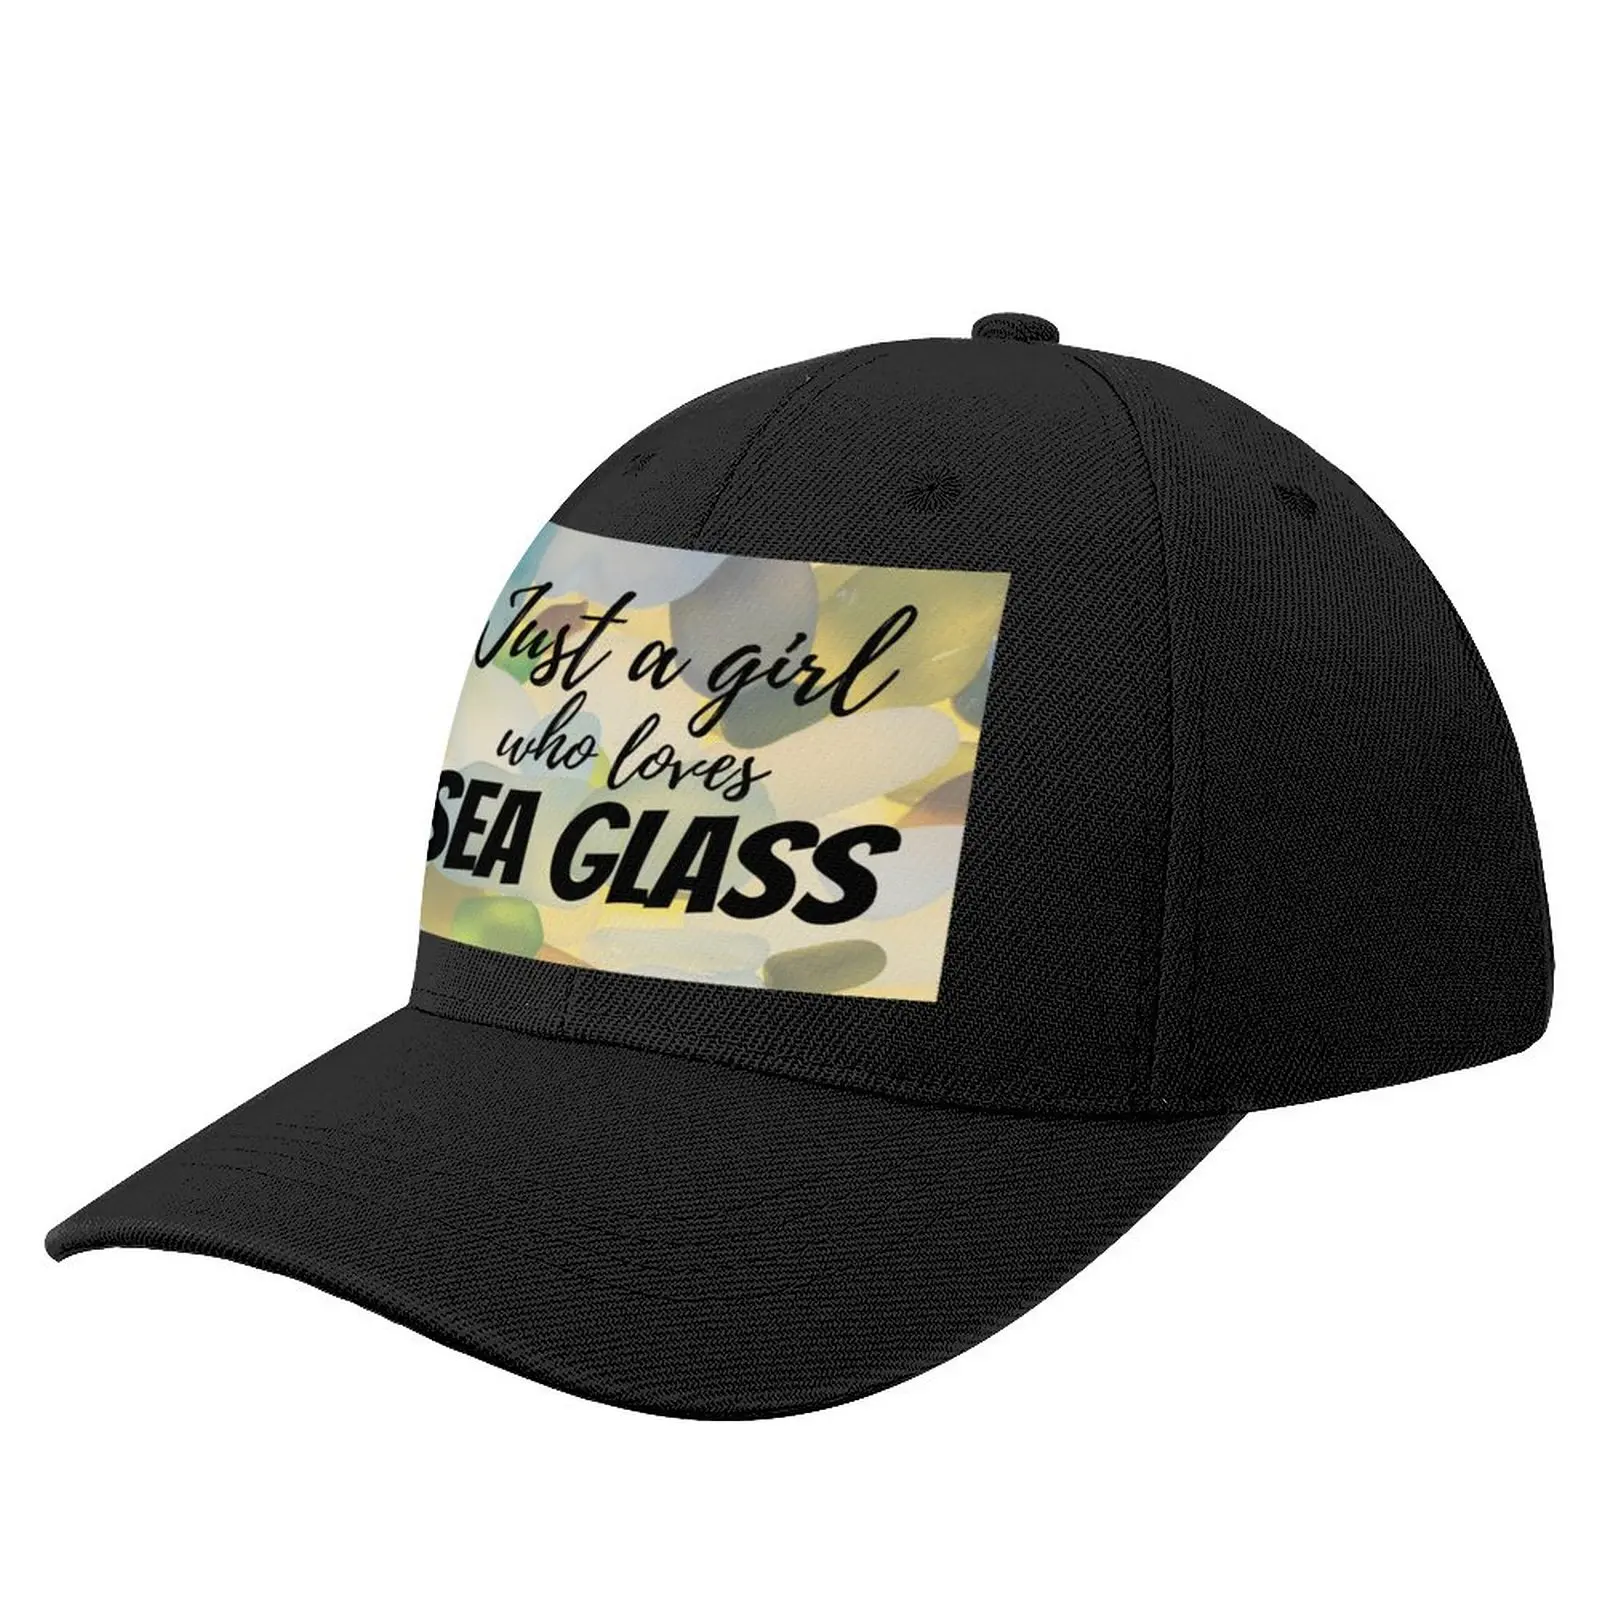 

Just a girl who loves Sea glassCap Baseball Cap black Hat Beach Trucker Hats Women's Cap Men's